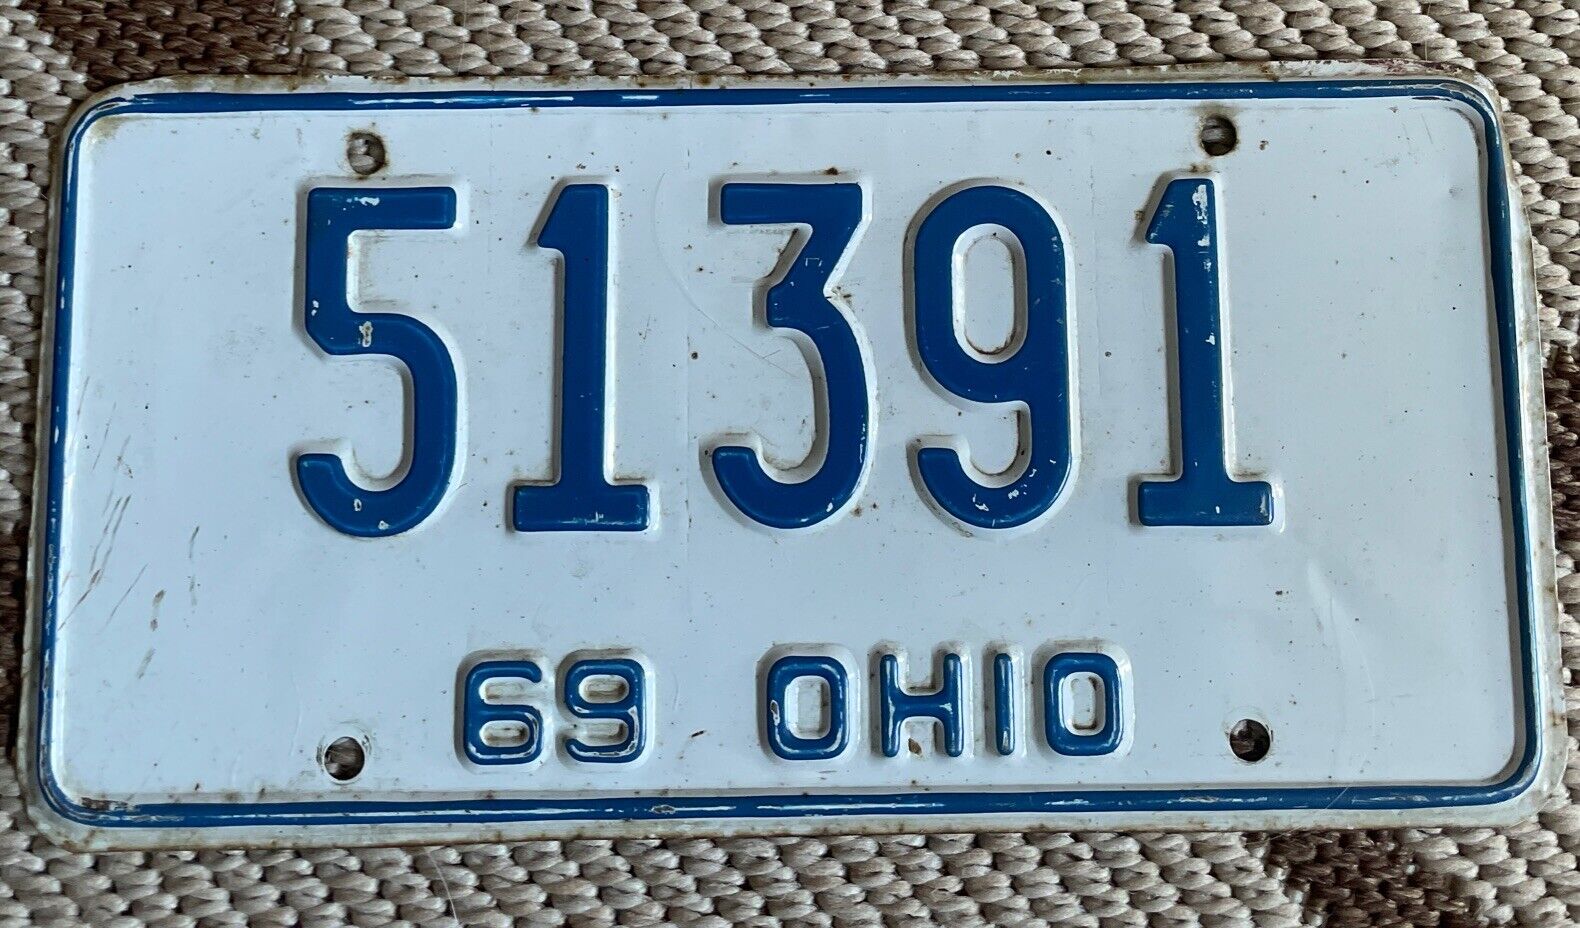 VTG 1969 Ohio License Plate White Blue Garage Man Cave Wall Decor 51391 Good